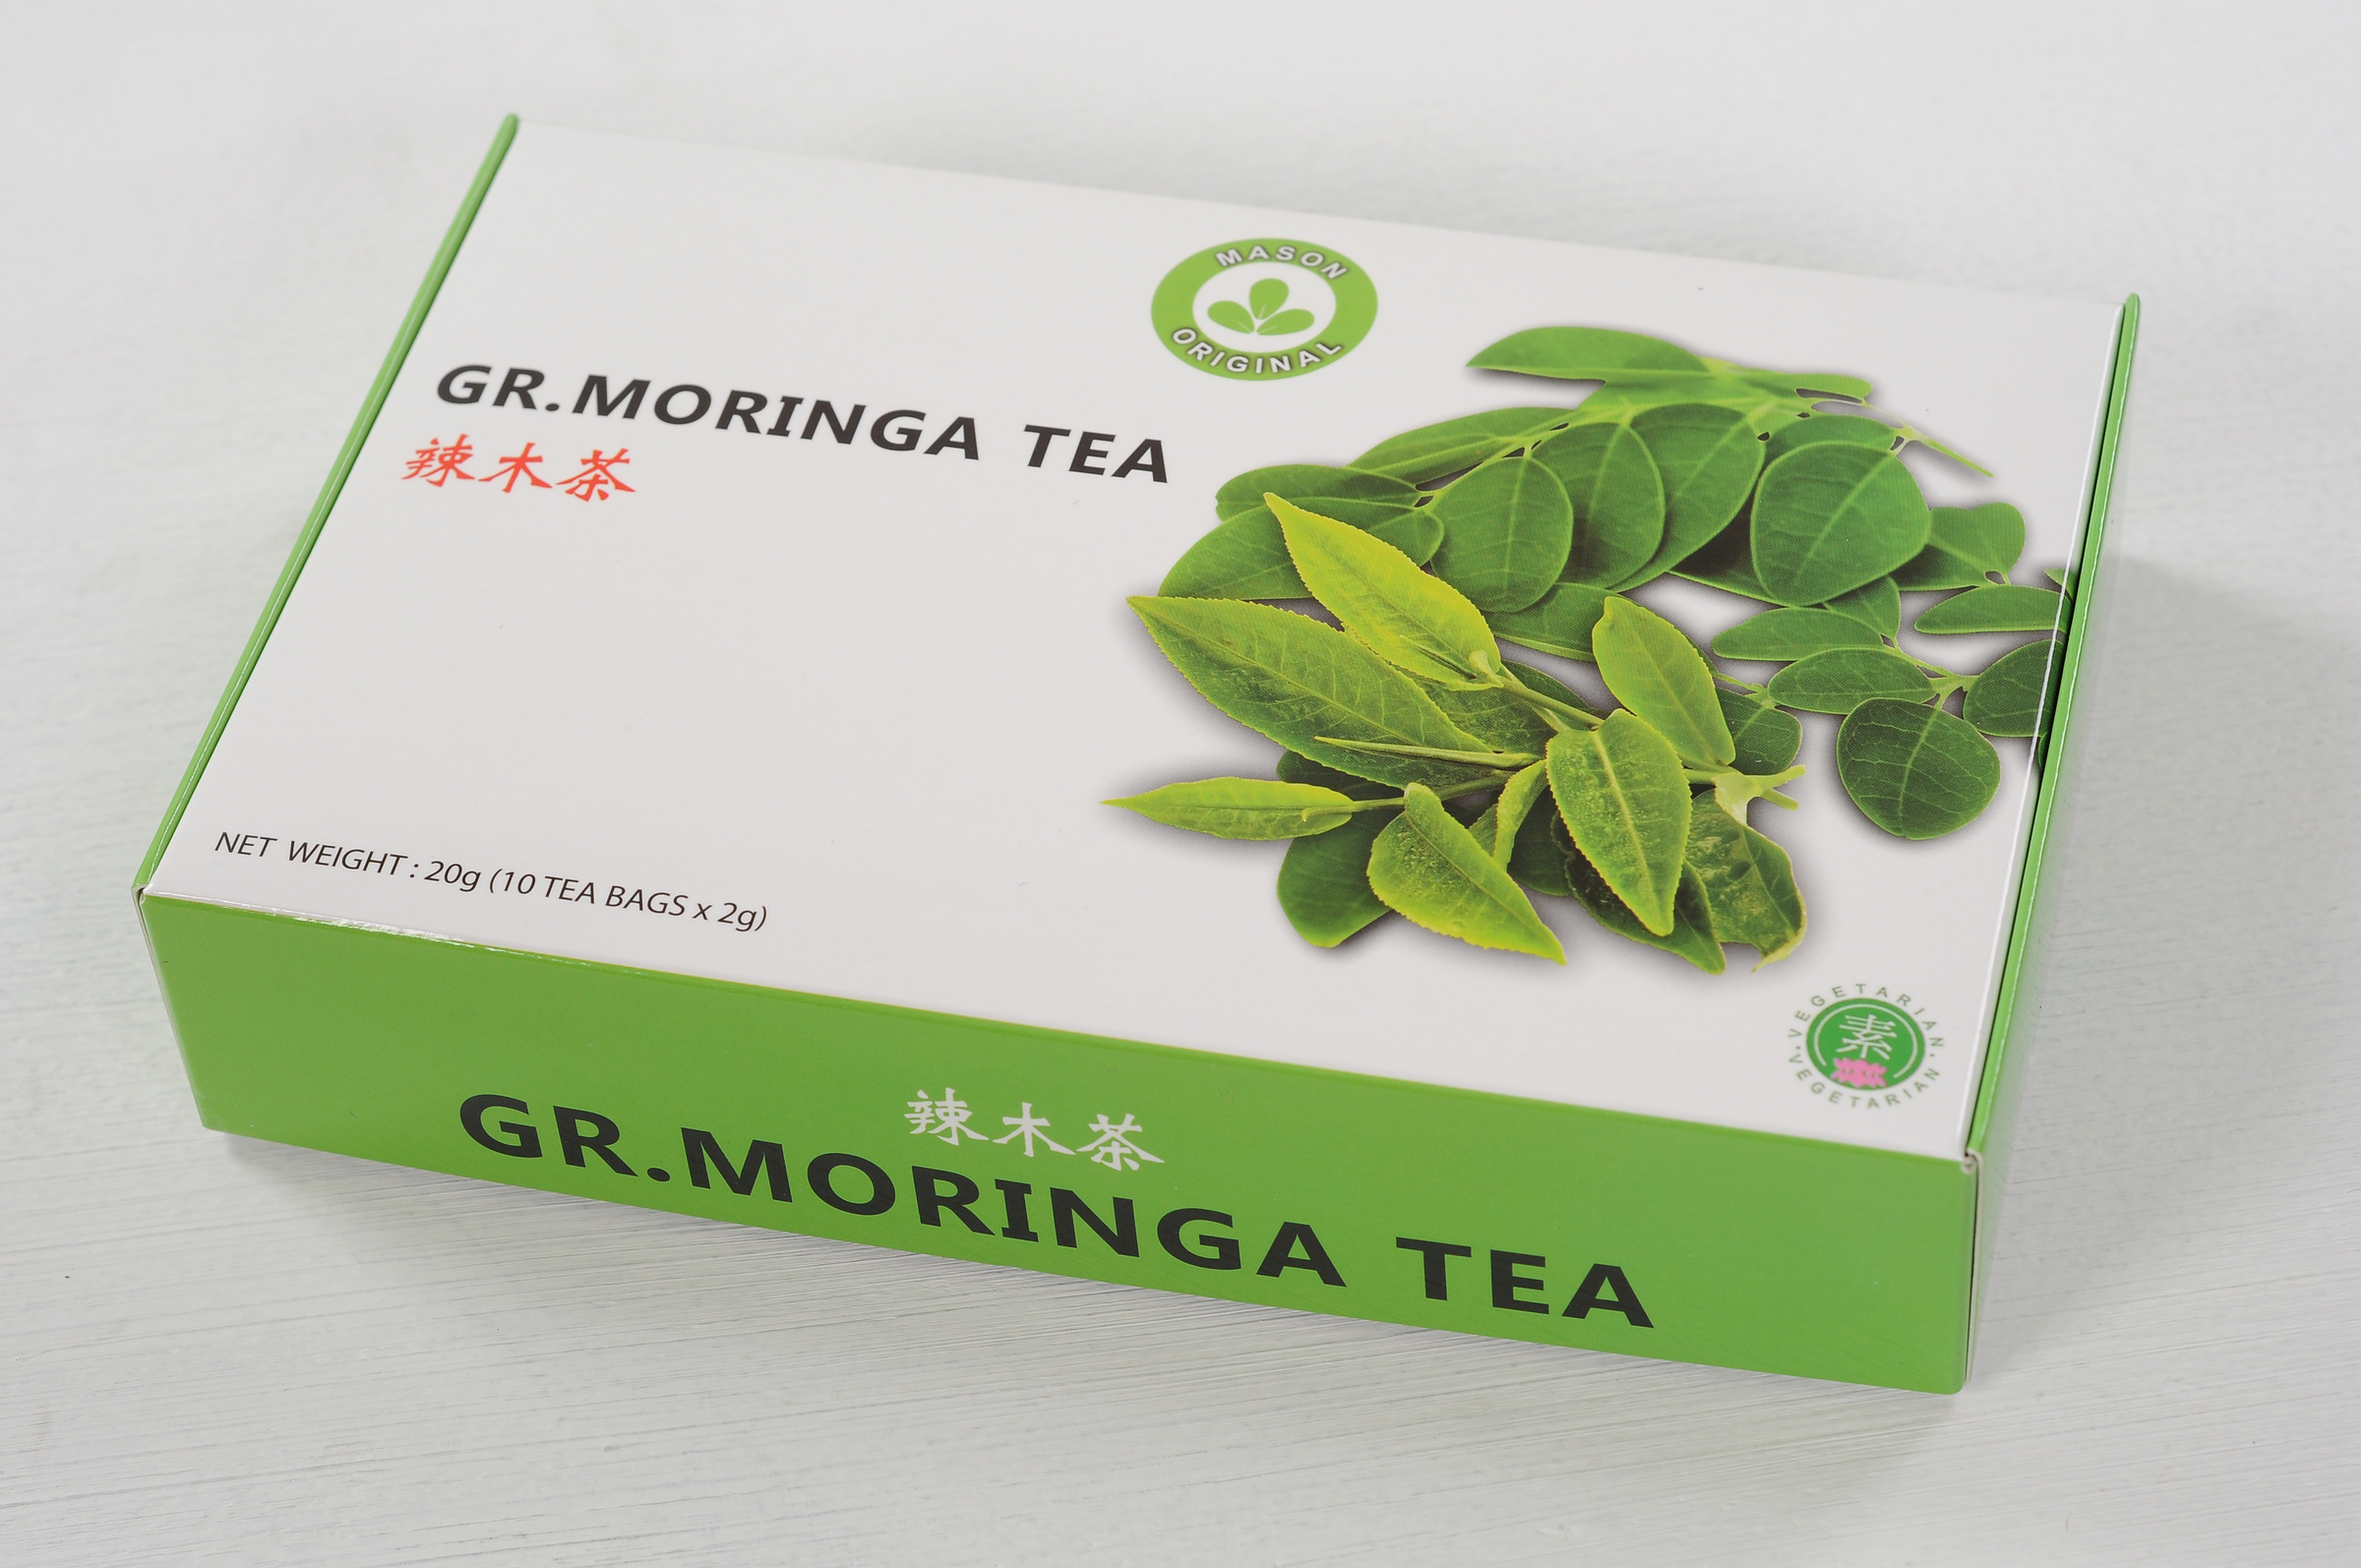 Mason Original GR Moringa Tea